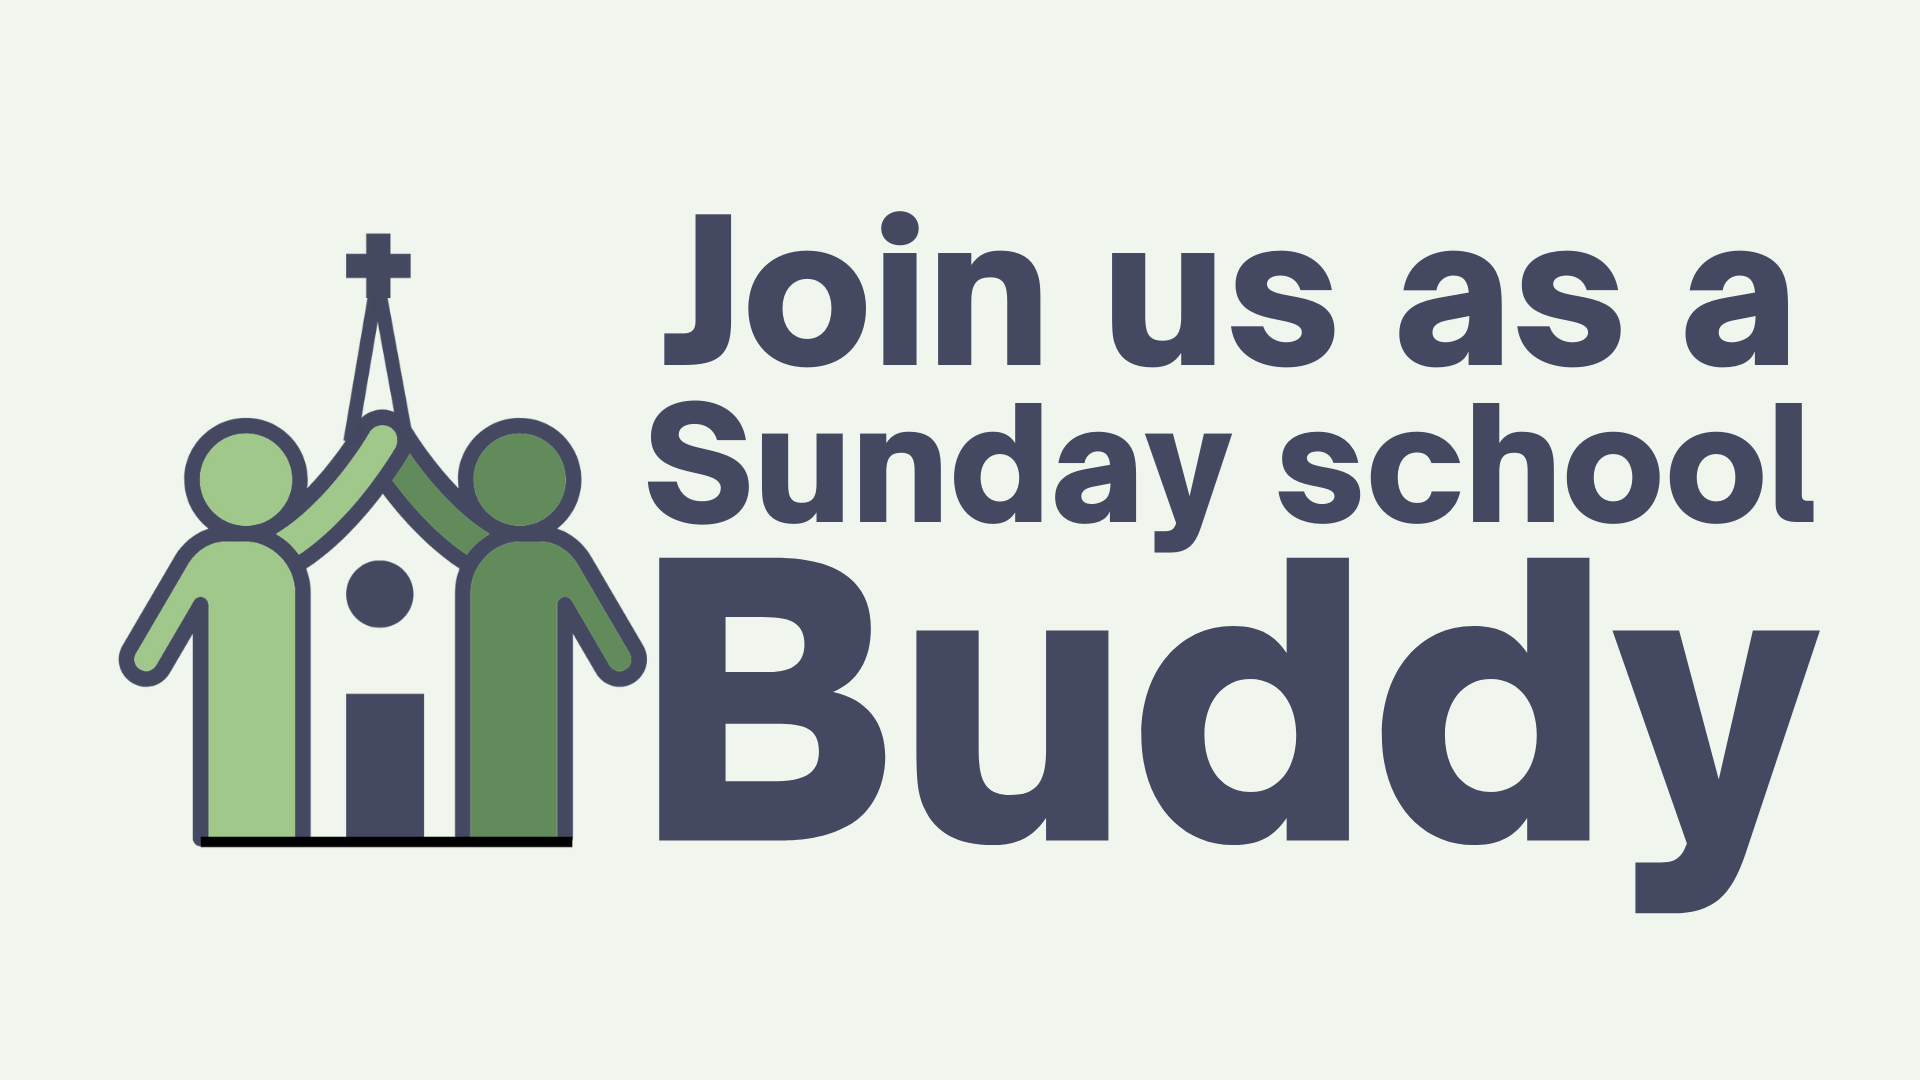 Join us as a Sunday school Buddy (Presentation (169))